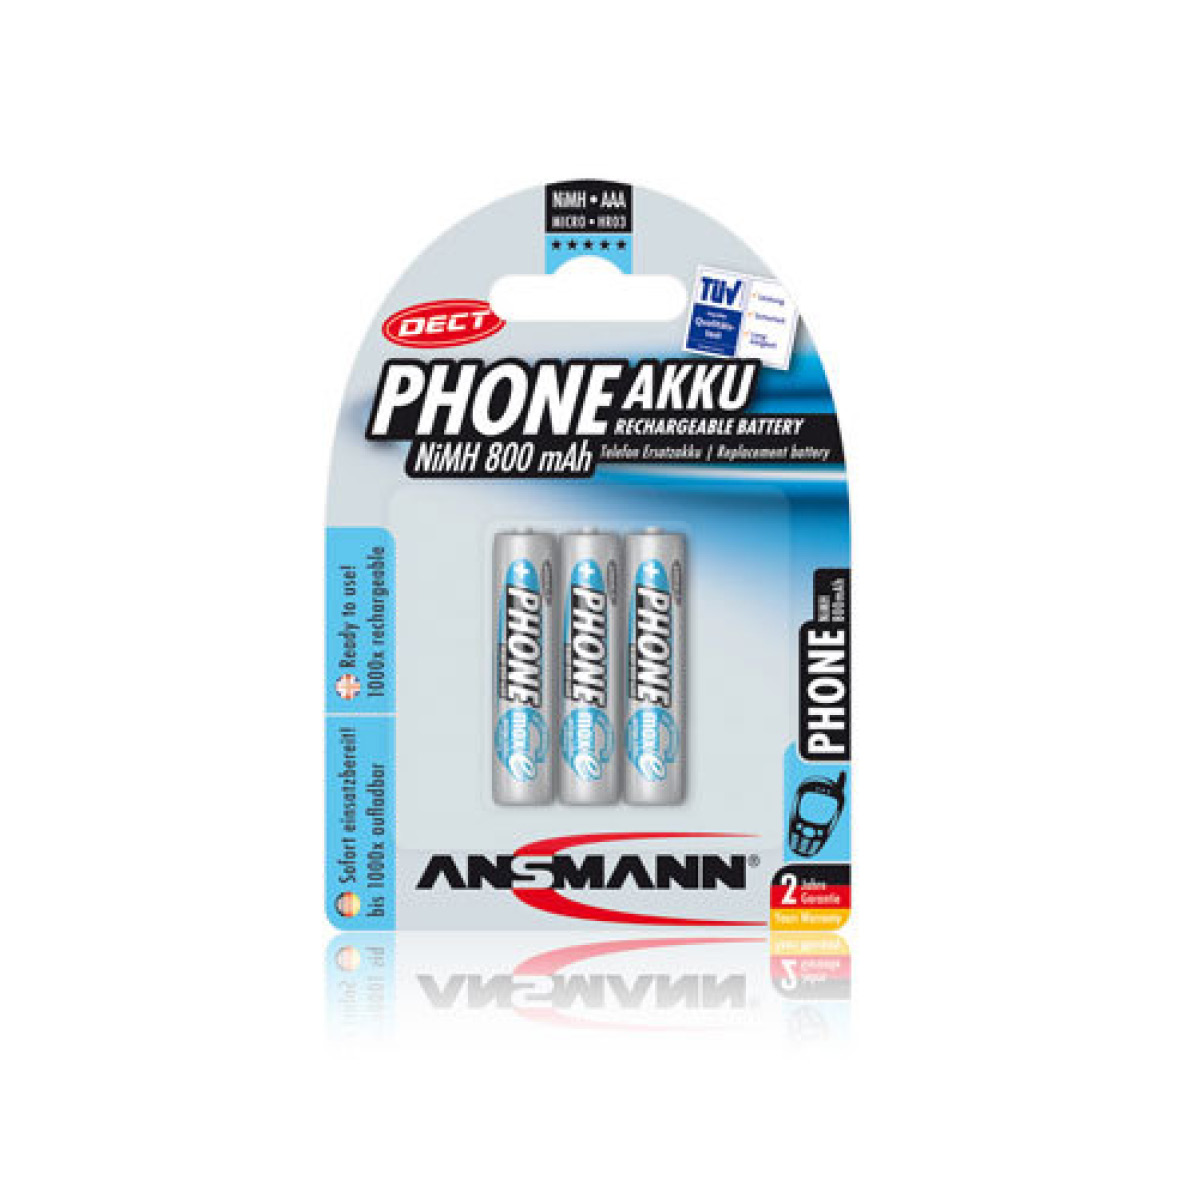 Ansmann Akku maxE Phone Micro AAA 3er Blister